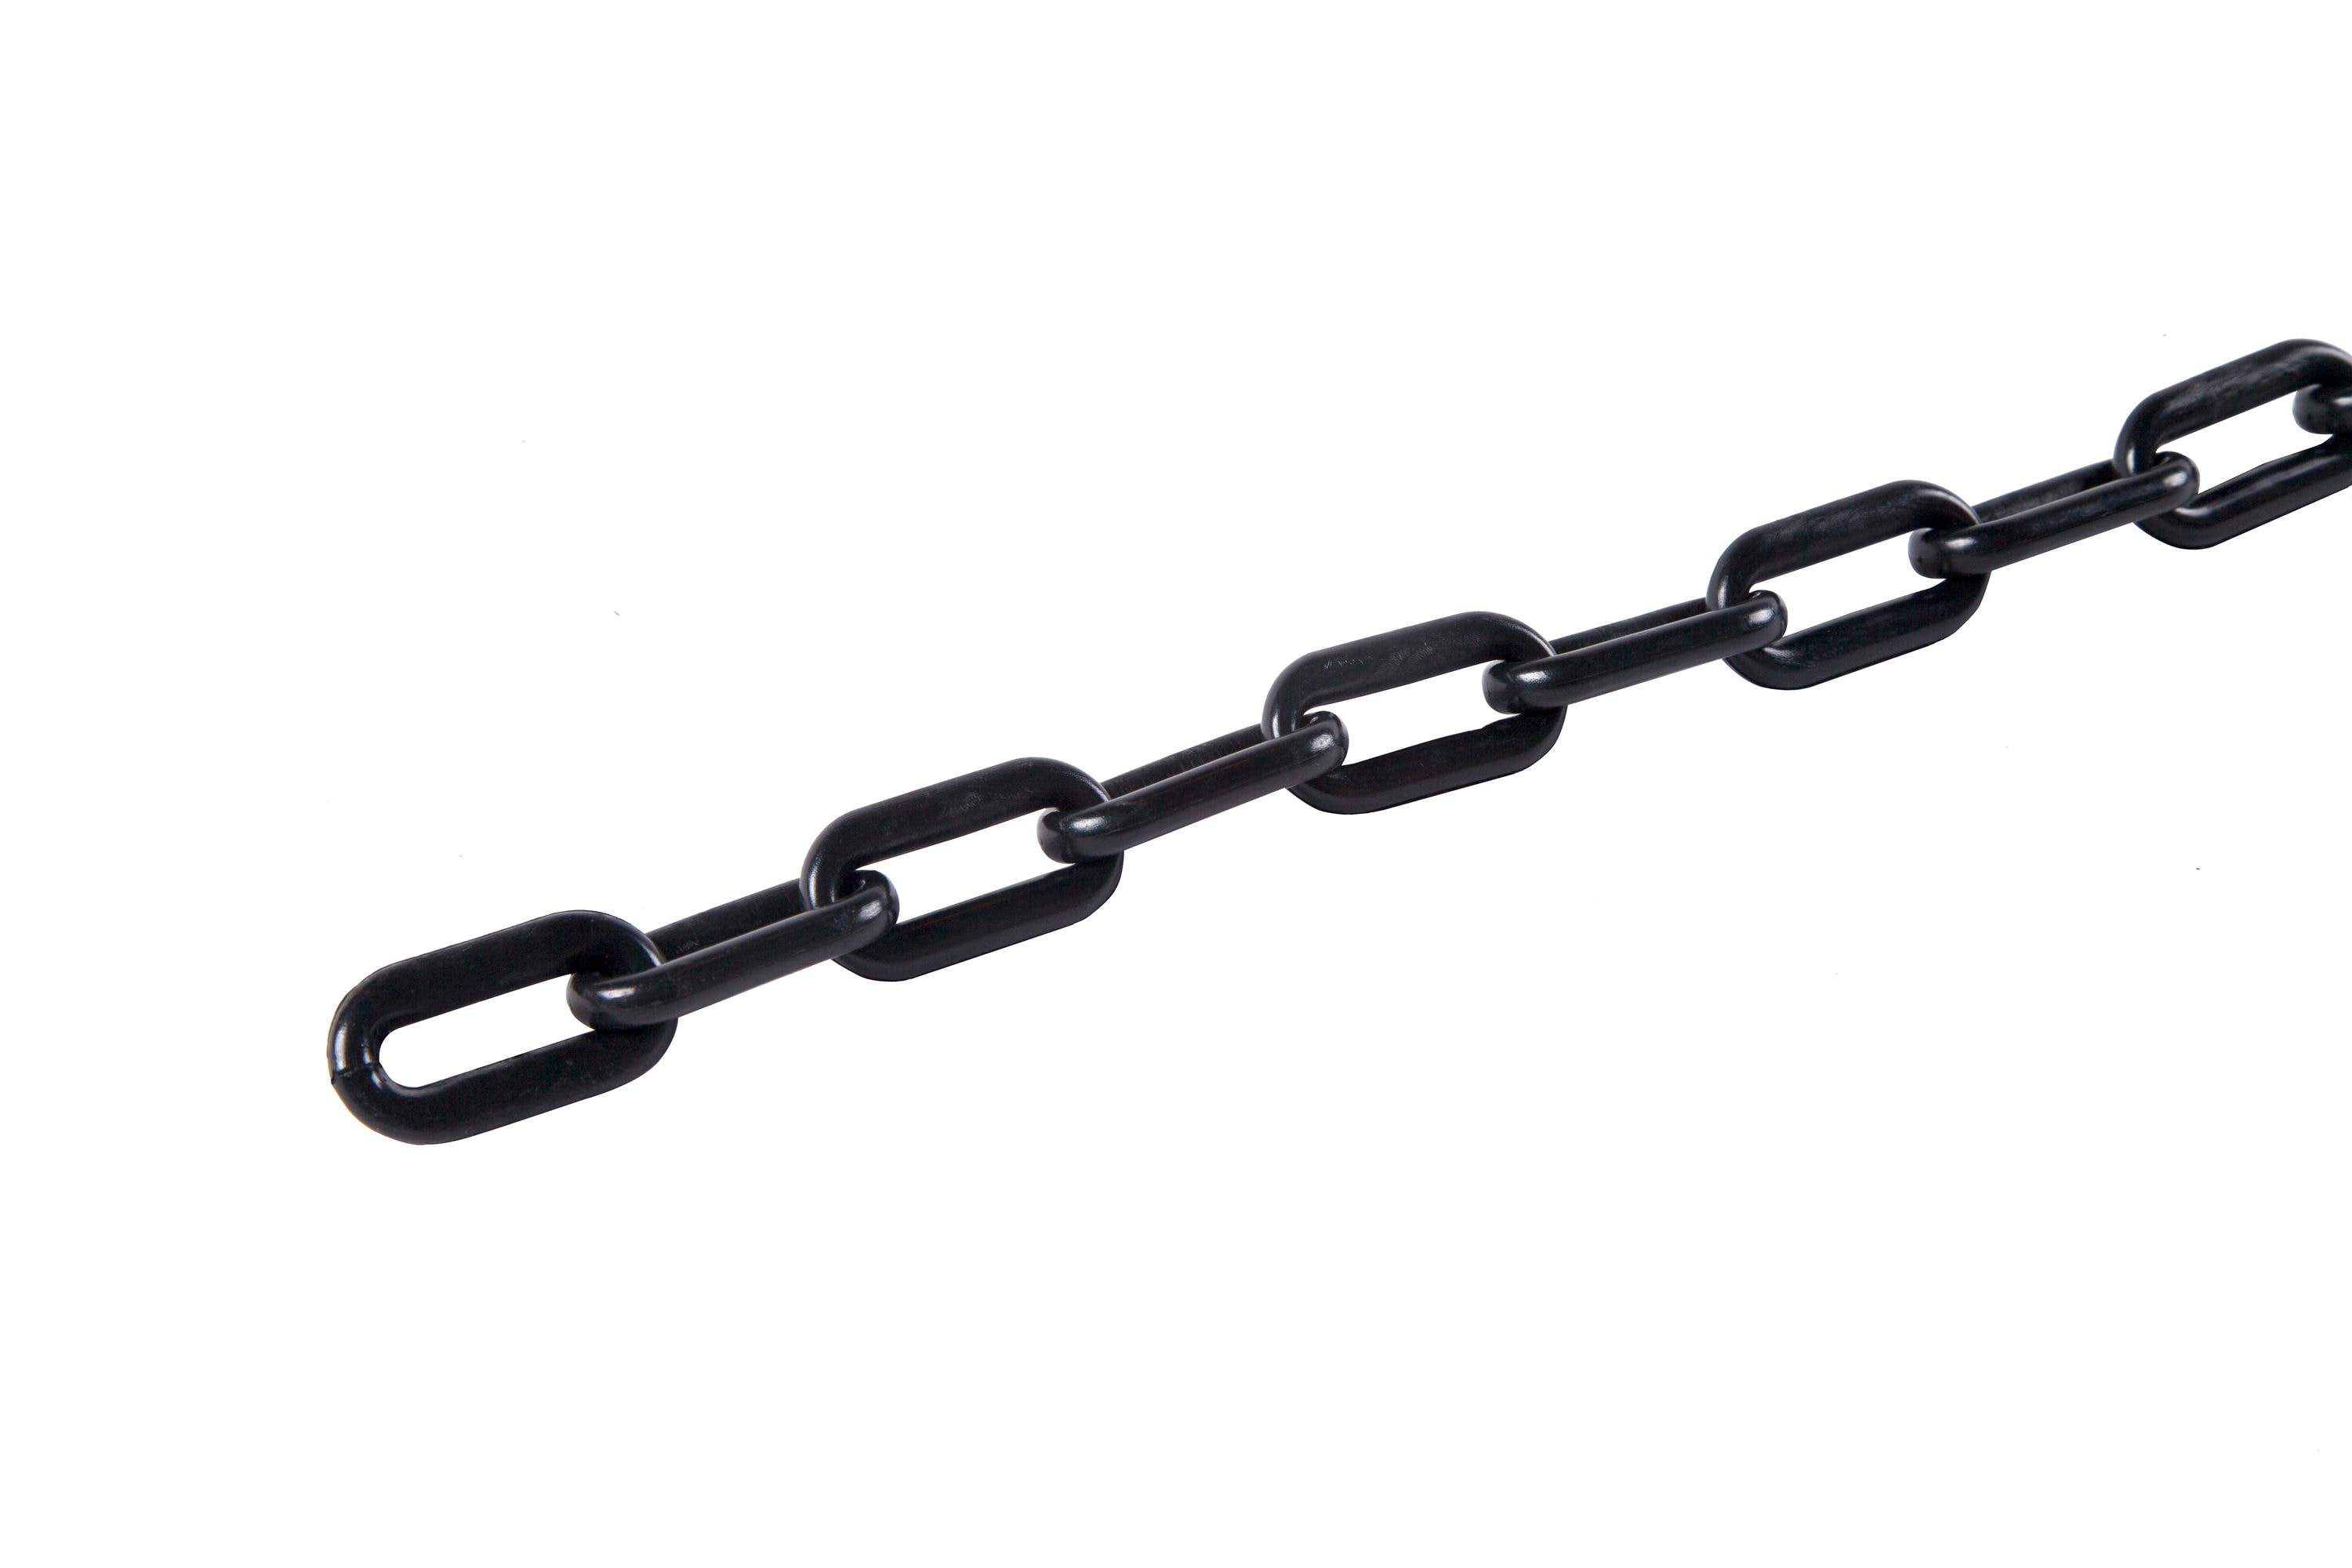 1 inch Snakeskin Cable Management Kit - Black - 8 Feet Pack